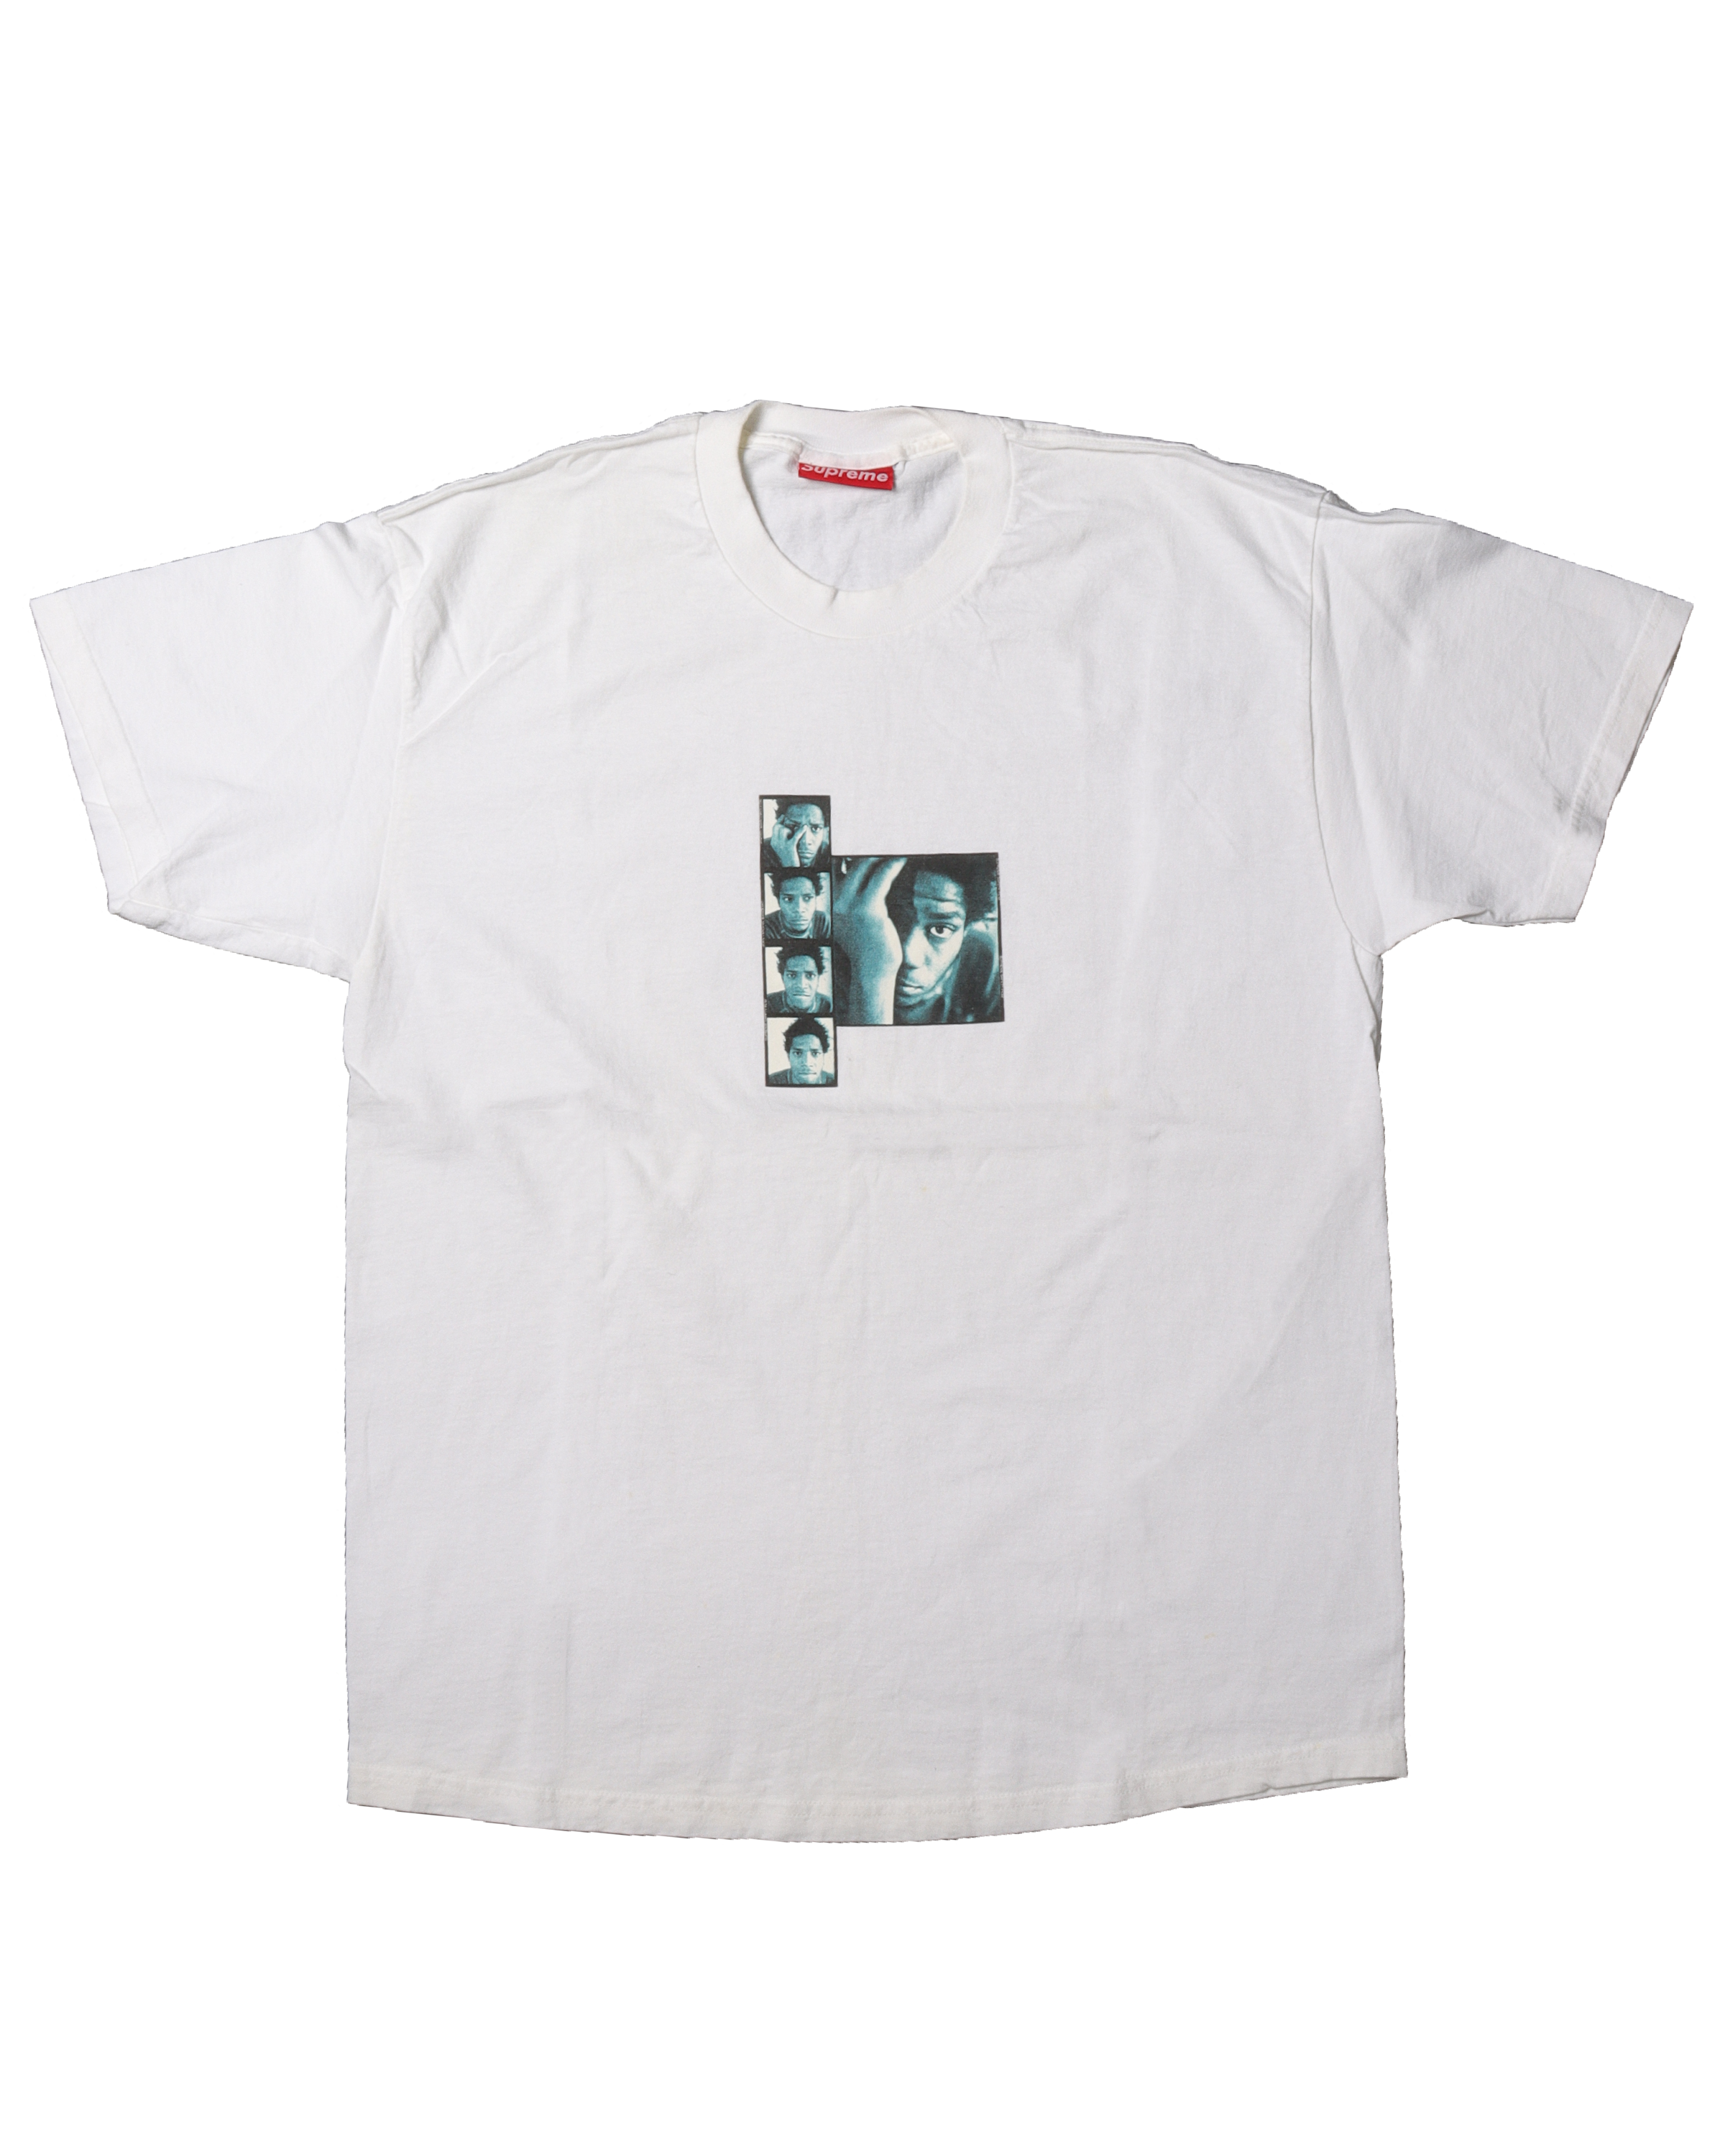 Supreme 1996 Ari Marcopoulos x Jean Michel Basquiat White T Shirt